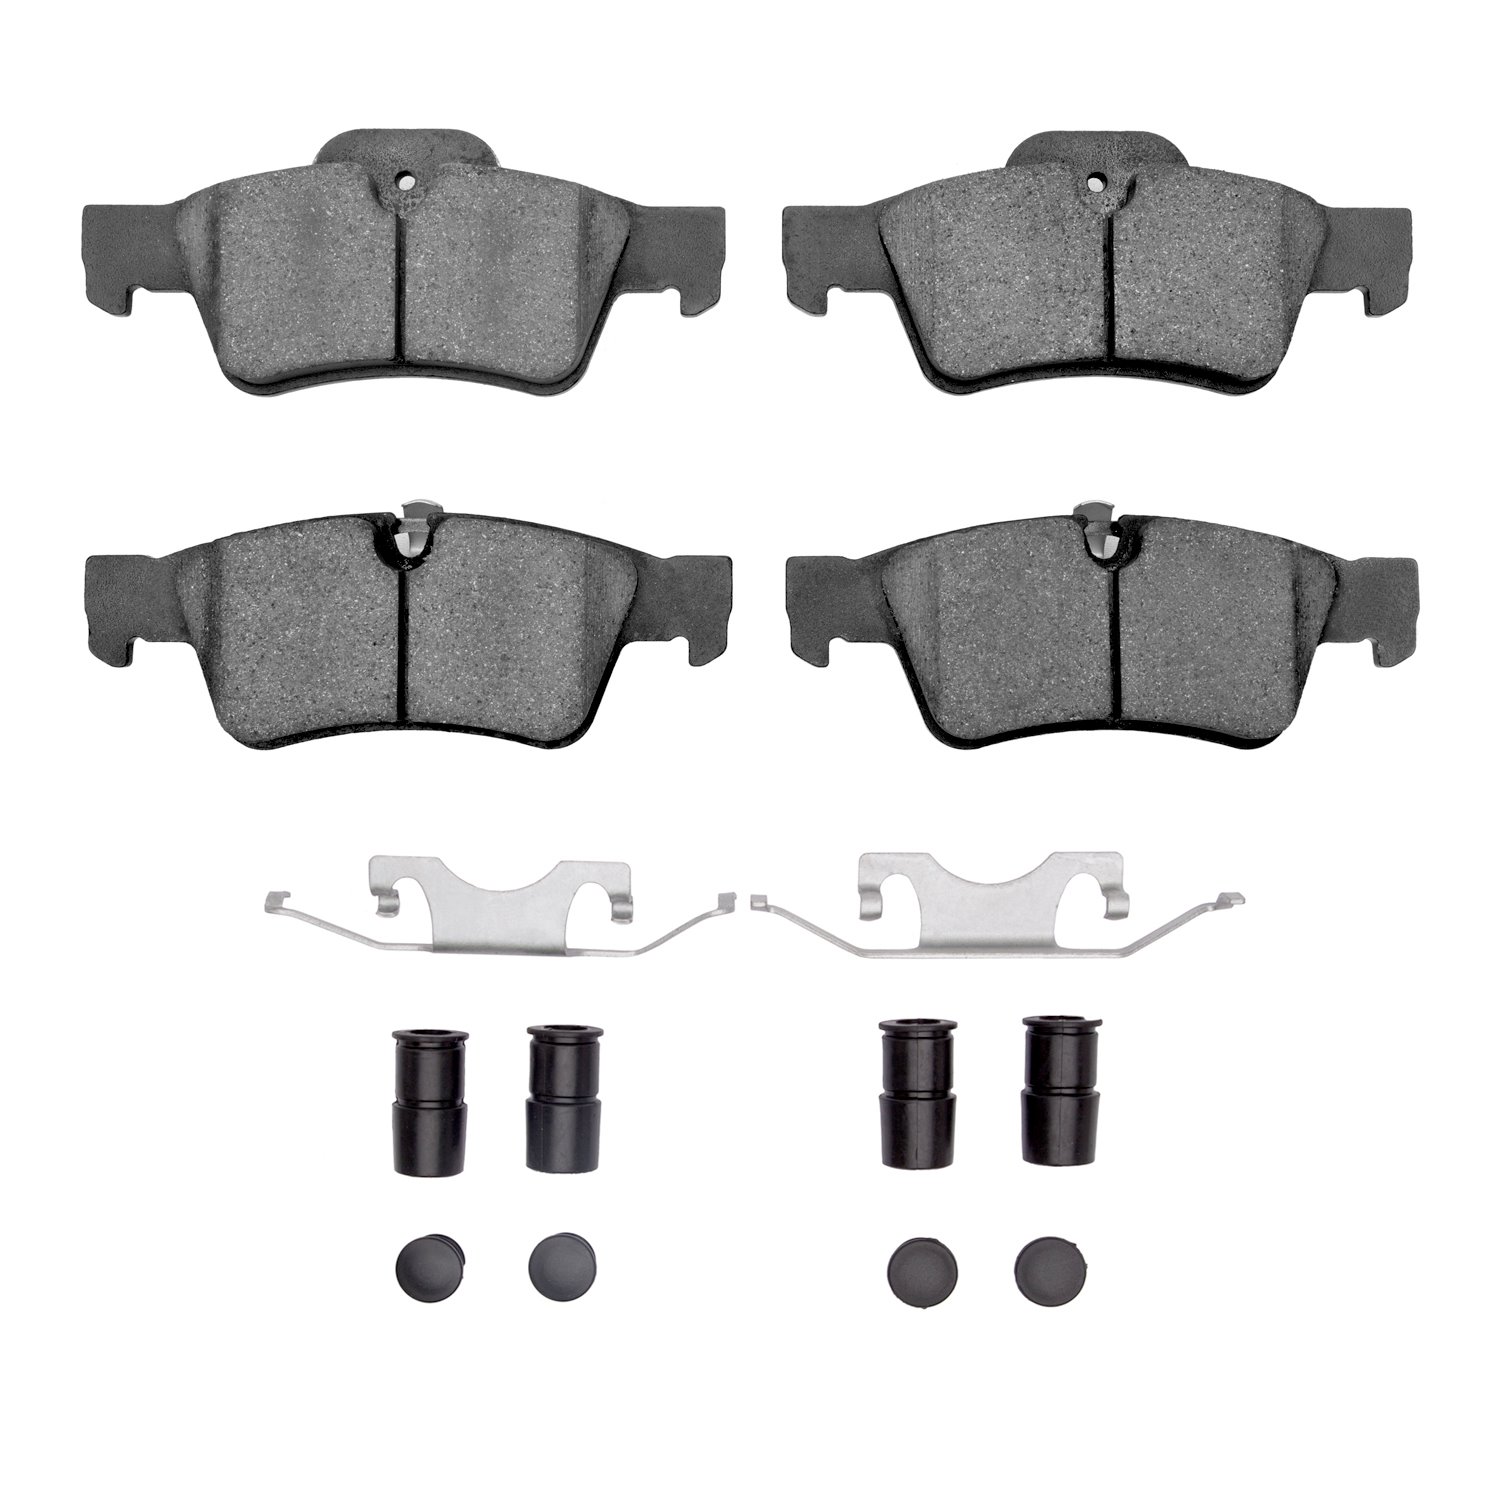 1551-1122-01 5000 Advanced Low-Metallic Brake Pads & Hardware Kit, 2005-2018 Mercedes-Benz, Position: Rear